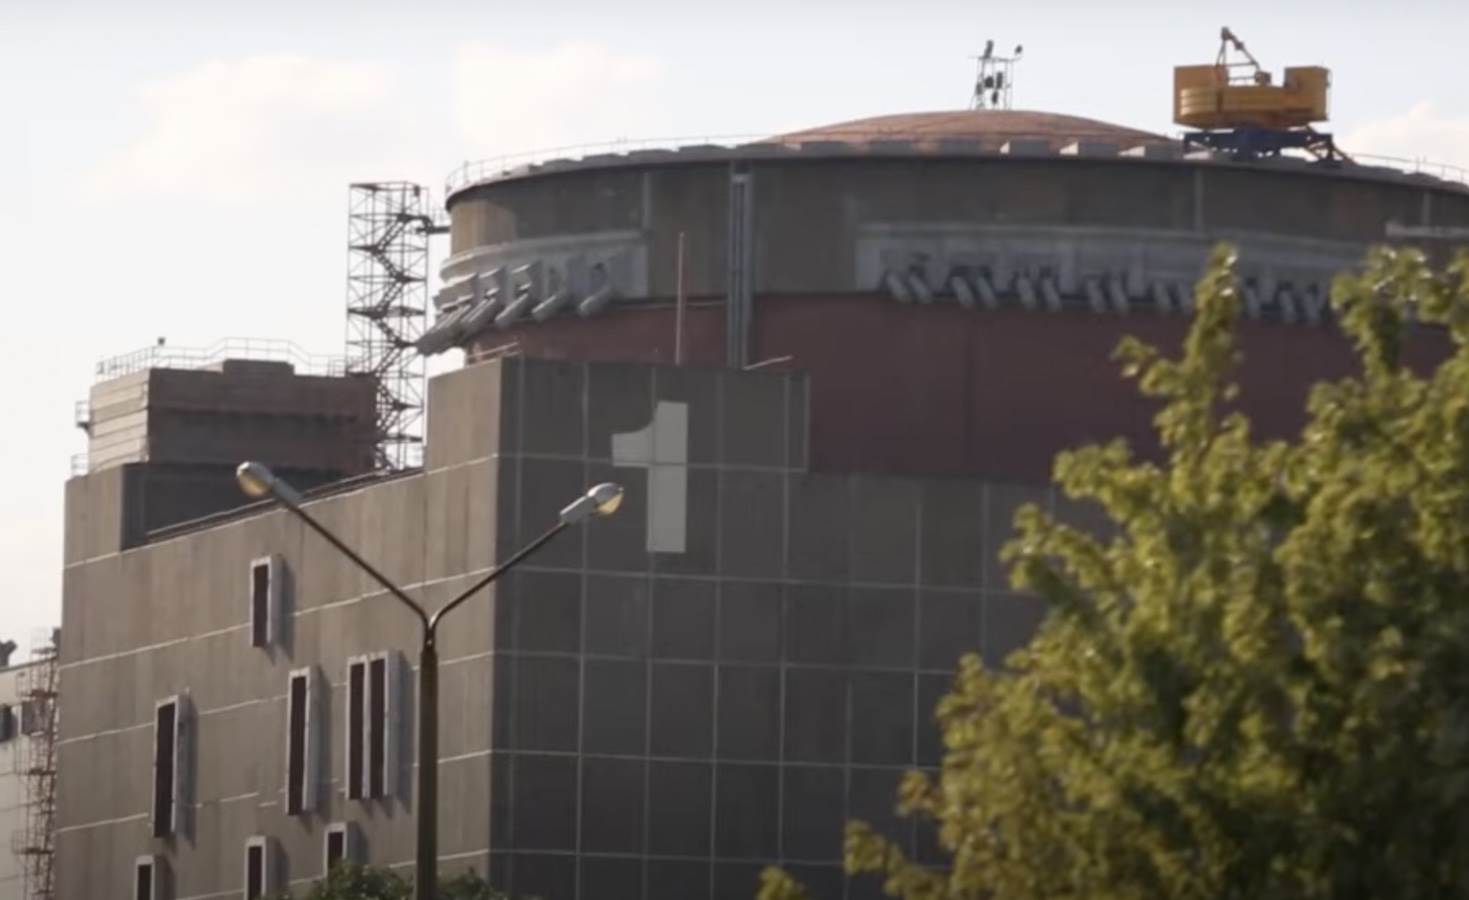  Serija eksplozija se desila u nuklearnoj elektrani Zaporožje u Ukrajini. 